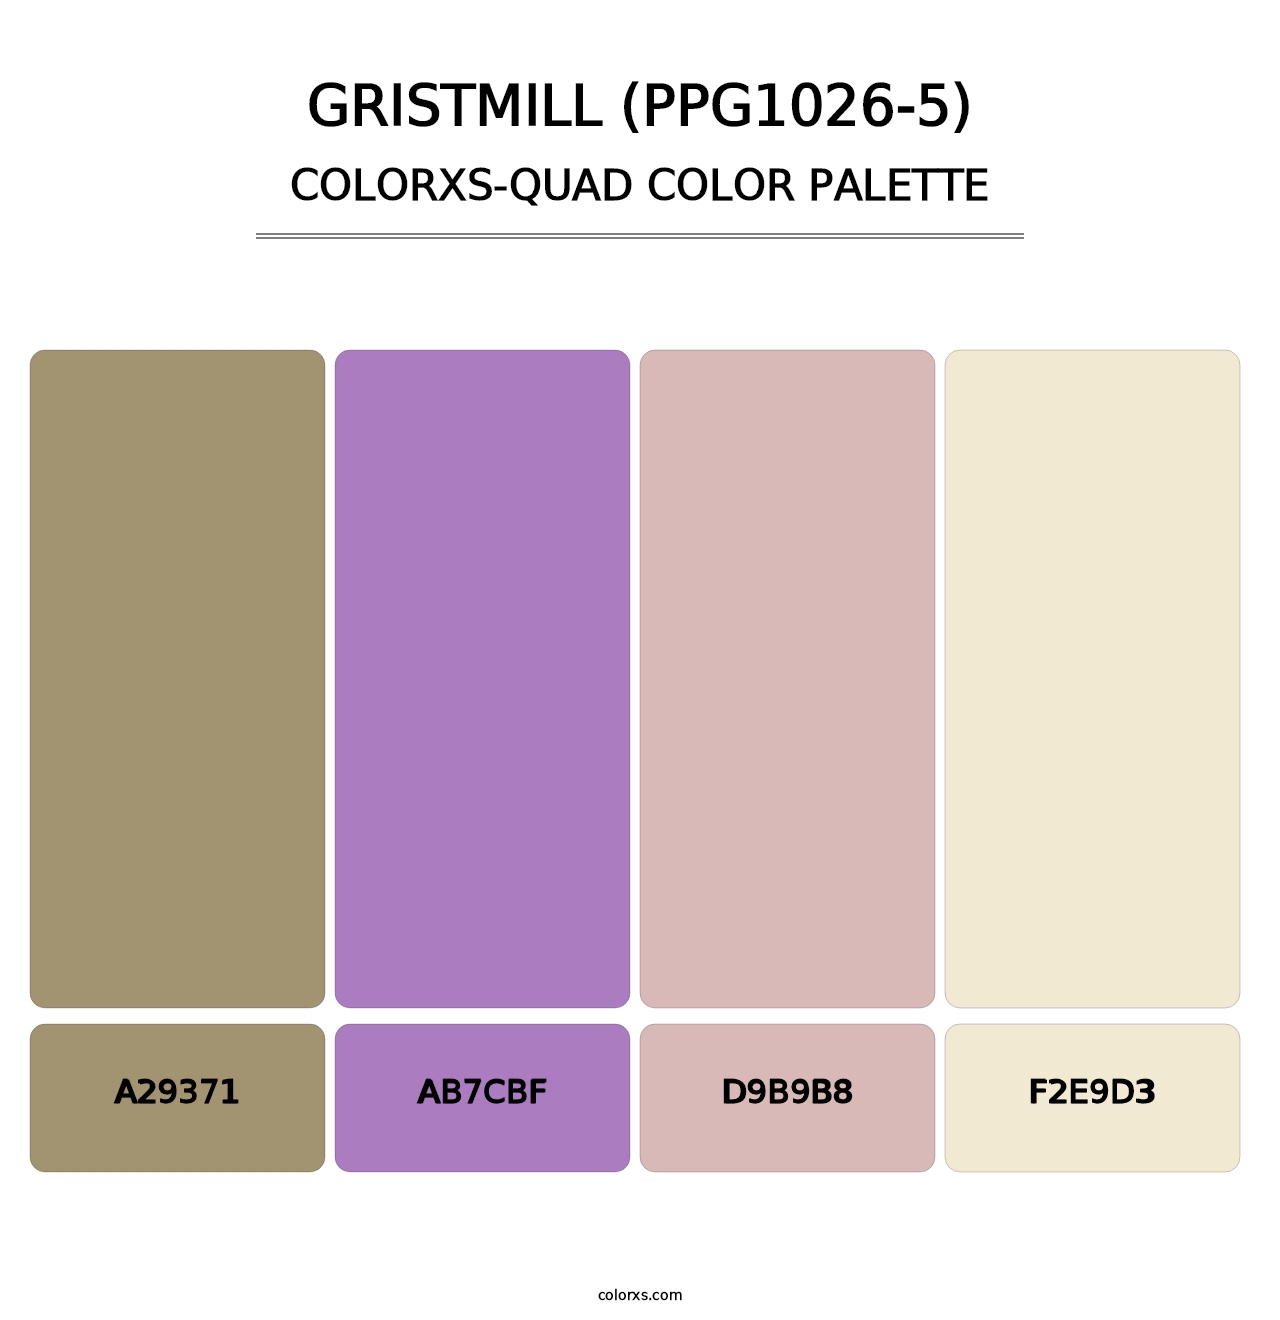 Gristmill (PPG1026-5) - Colorxs Quad Palette